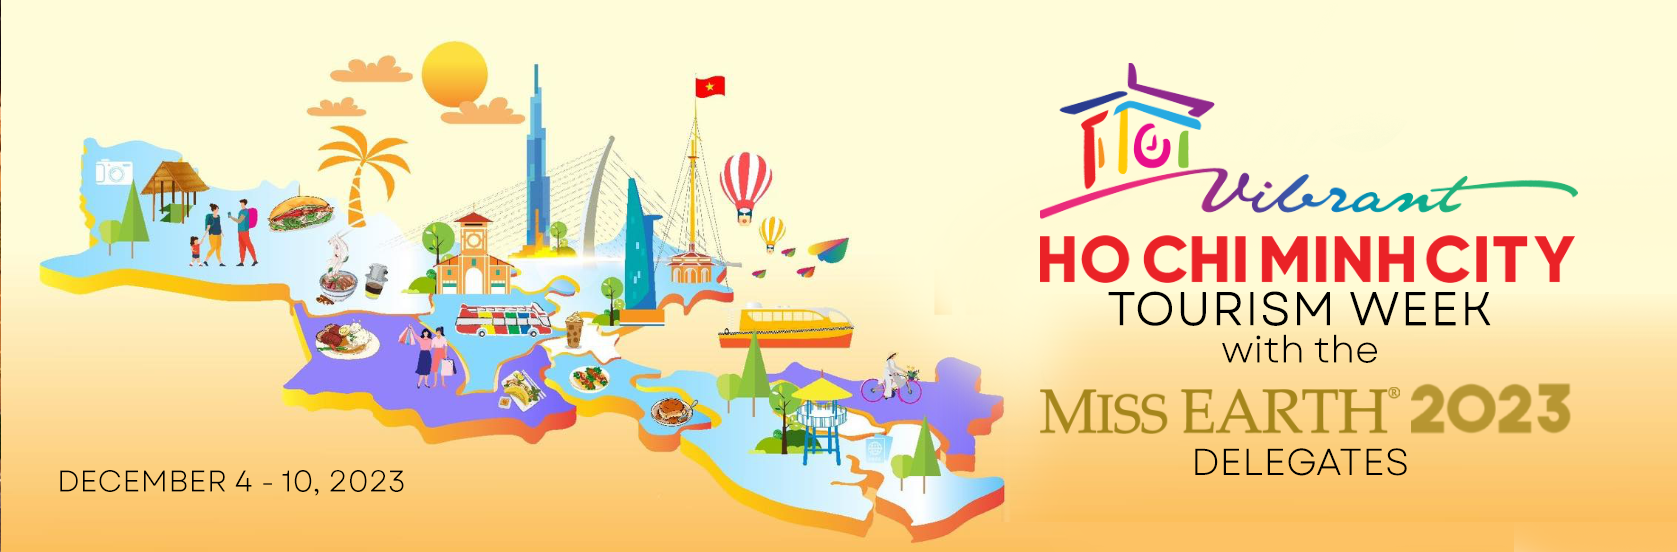 Ho Chi Minh City Tourism Week x Miss Earth 2023